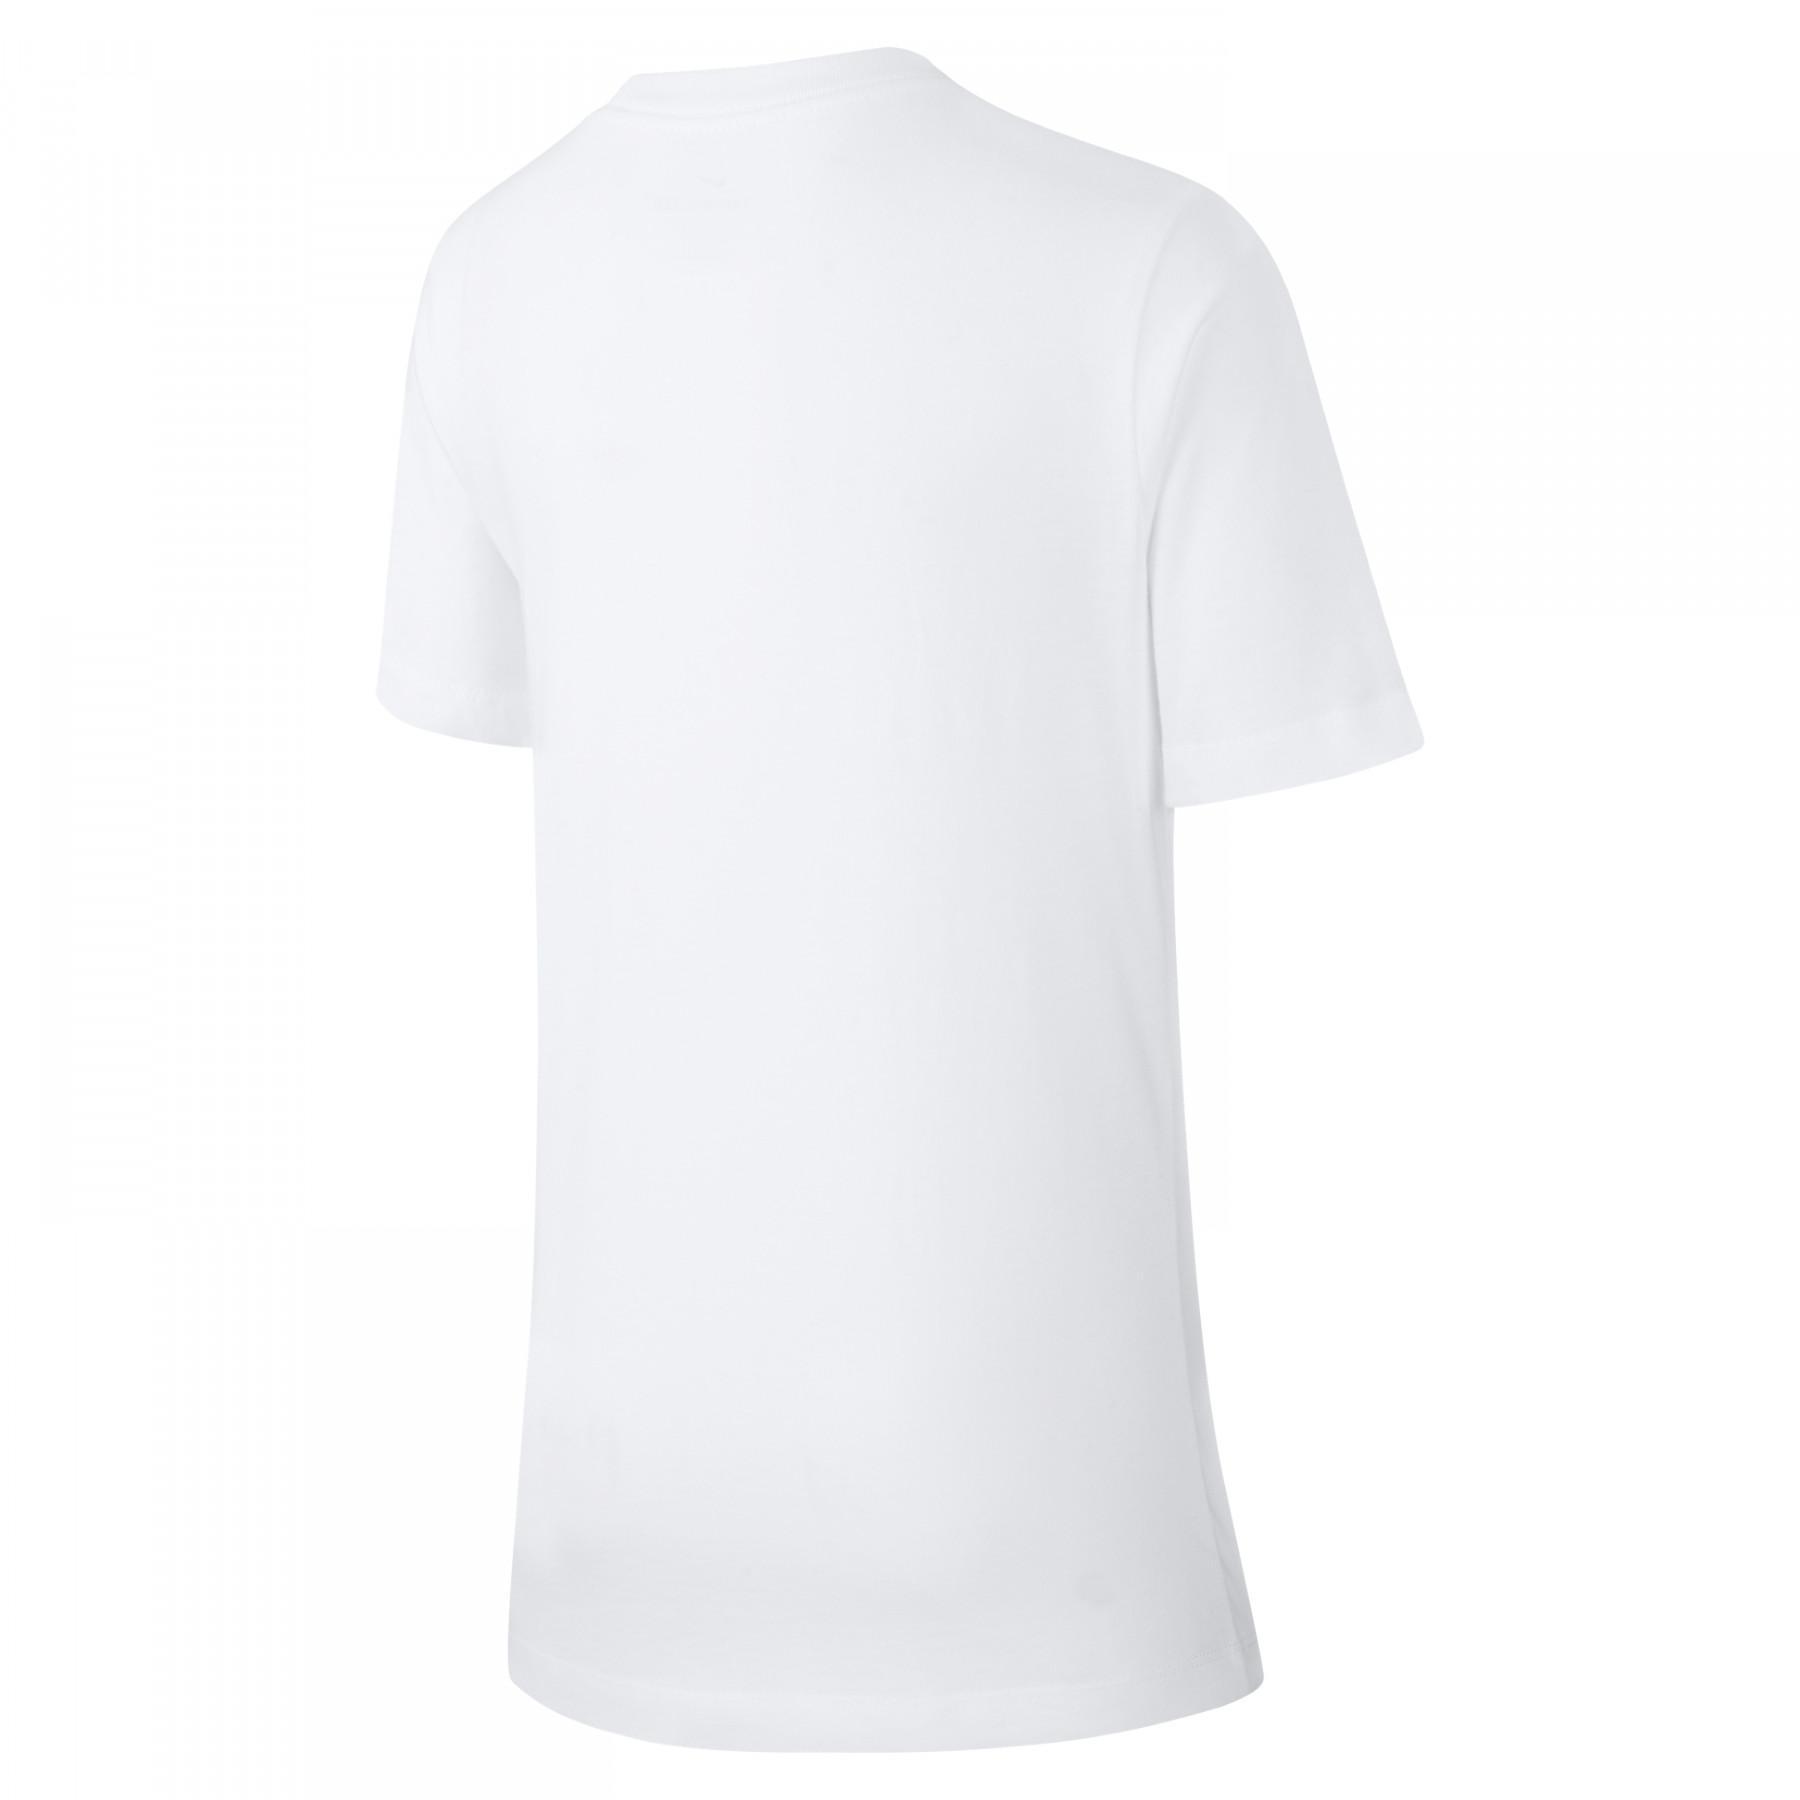 Kinder-T-shirt PSG Evergreen Crest 2019/20